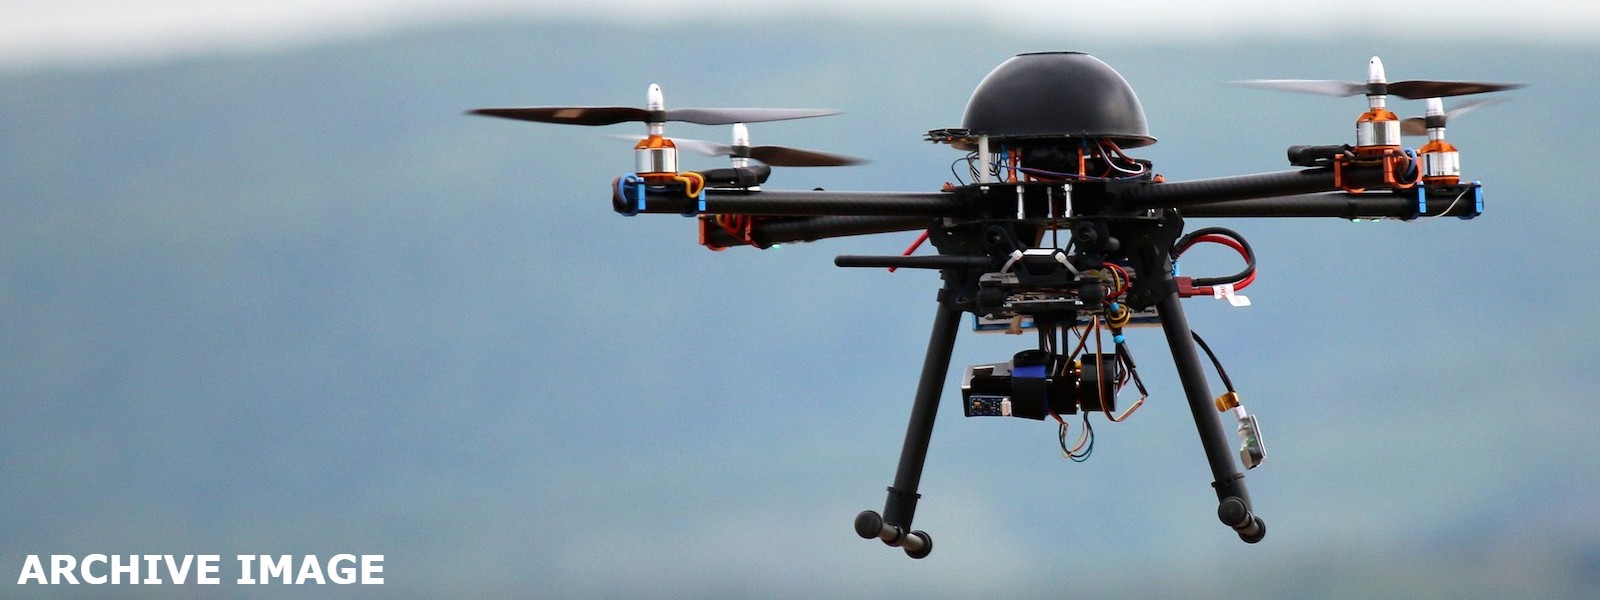 Australia gifts aerial drones to fight crime in Sri Lanka